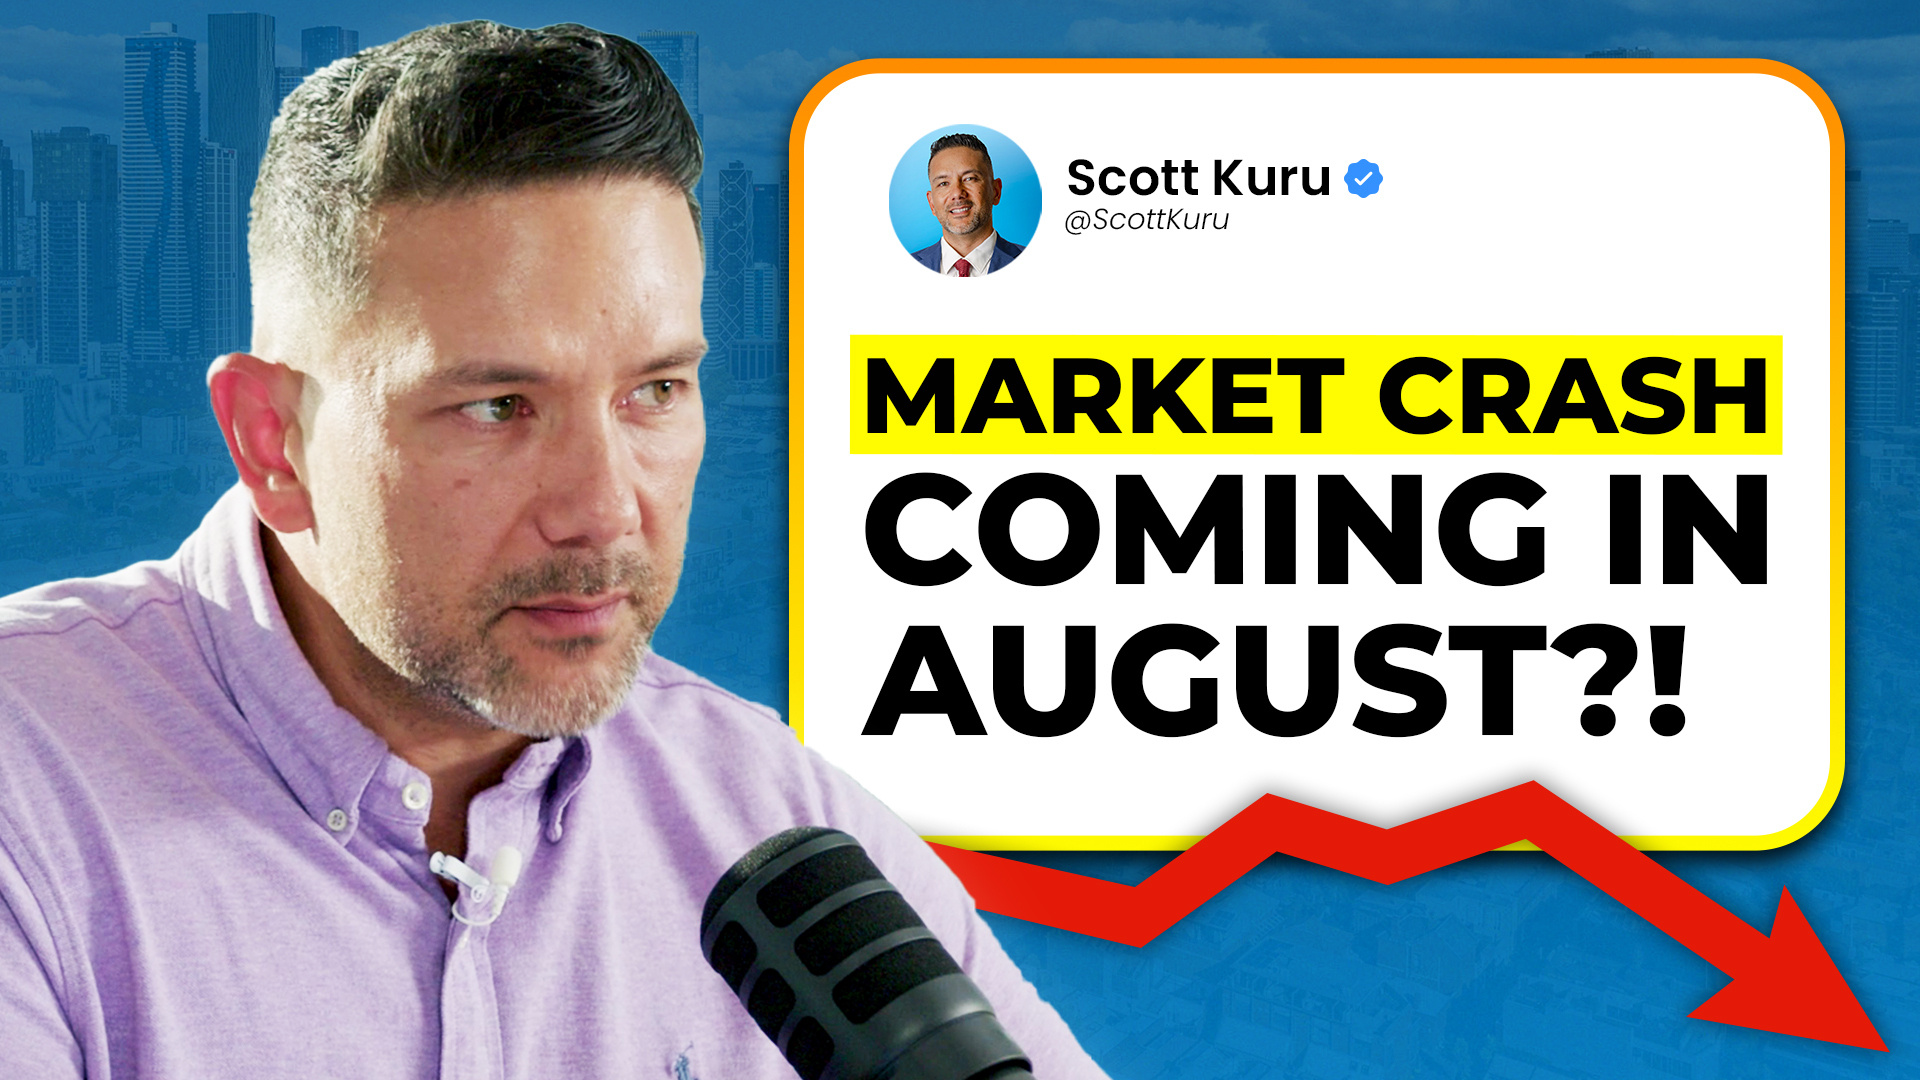 Andre_SK_Interest Rates Rising In August_YT Thumbnail-rev1